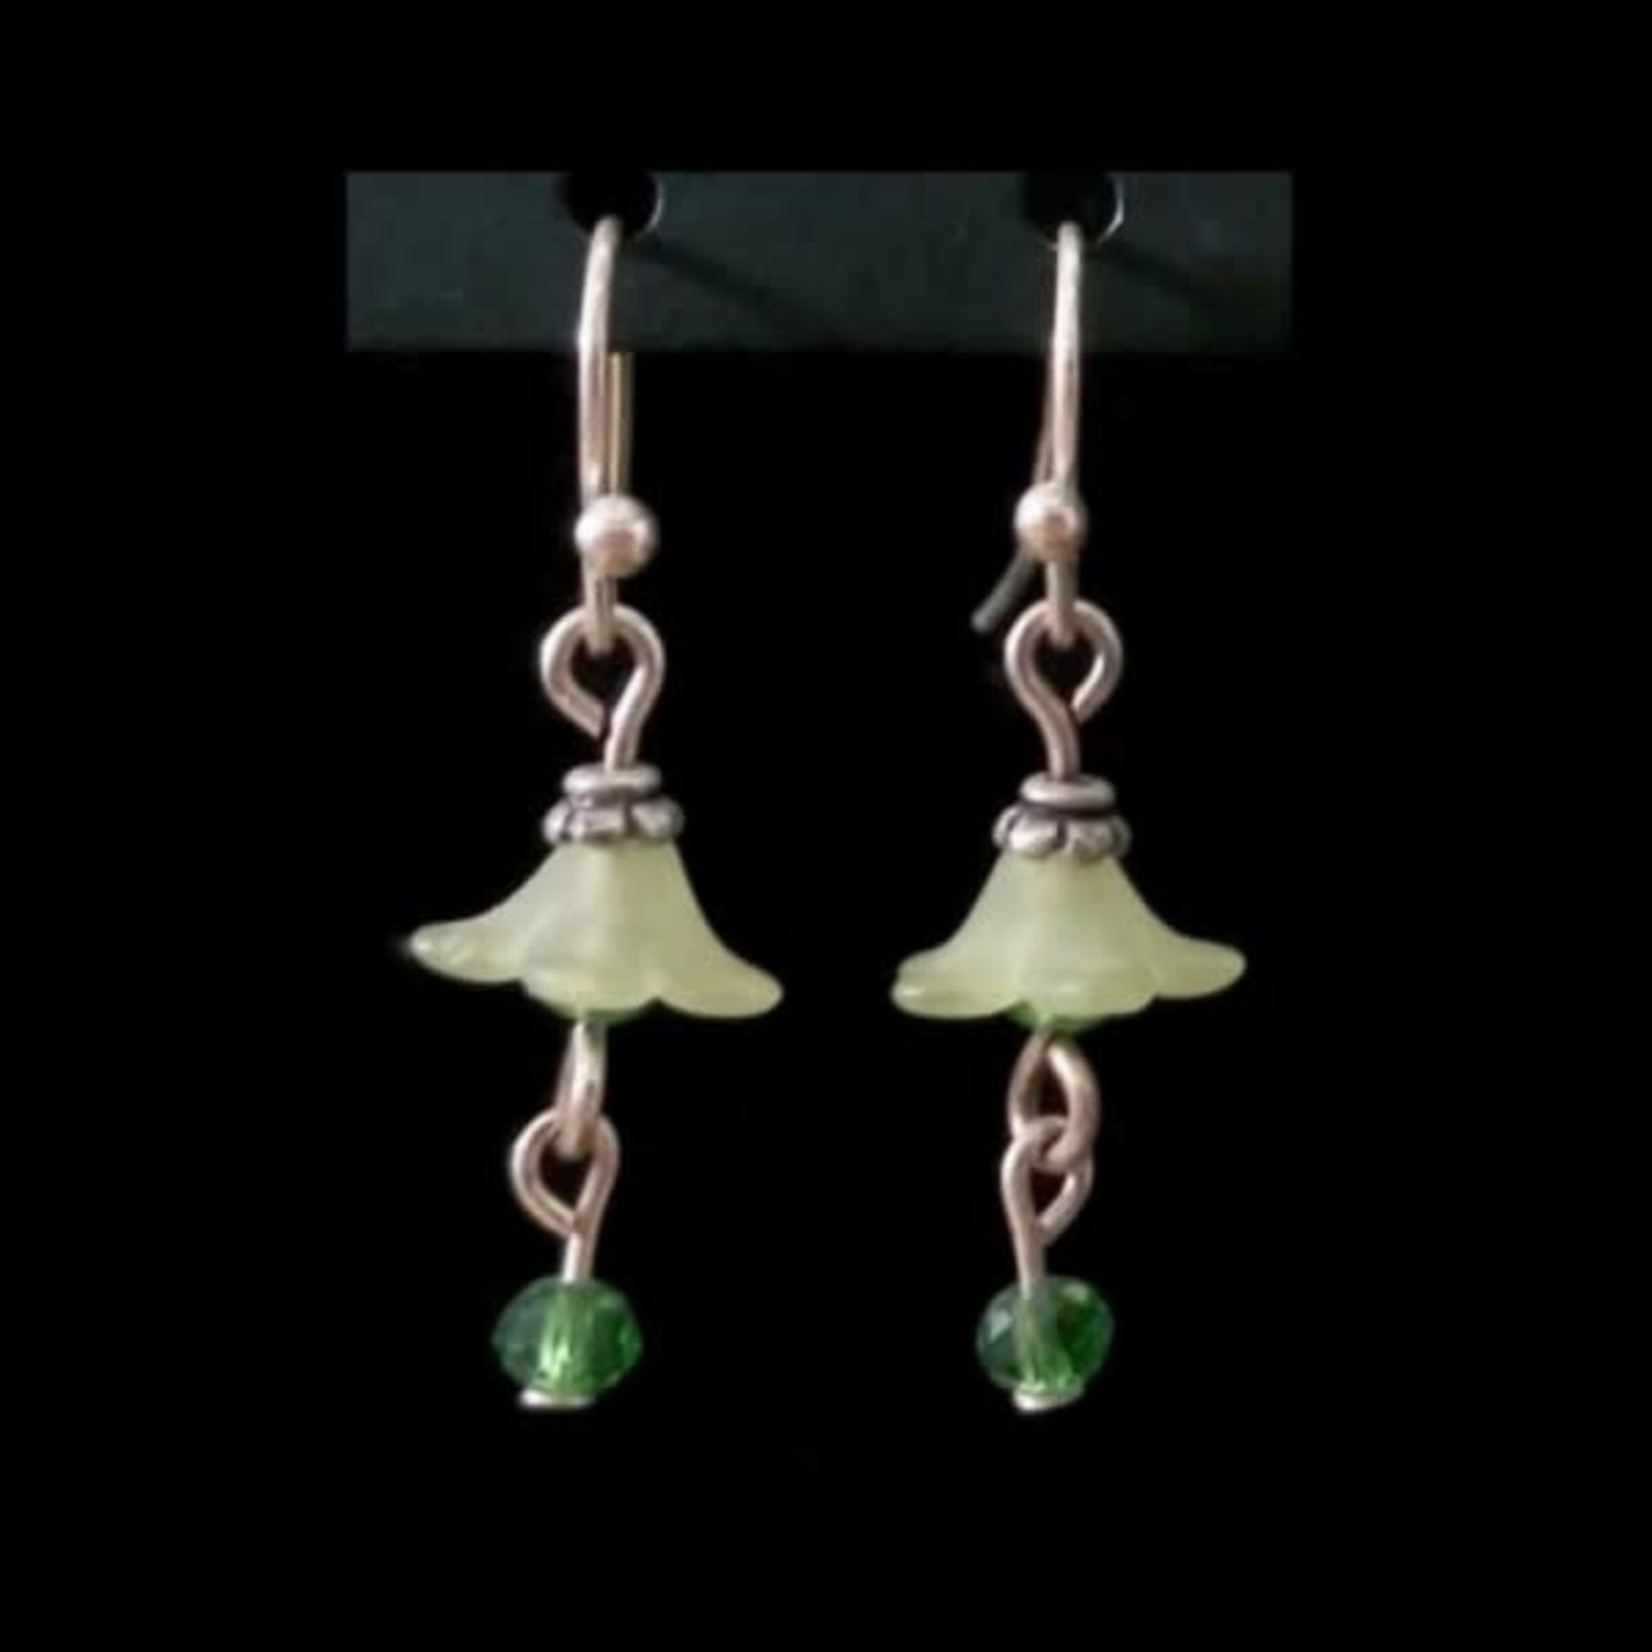 Bead Inspirations Delicata Green Earring Kit